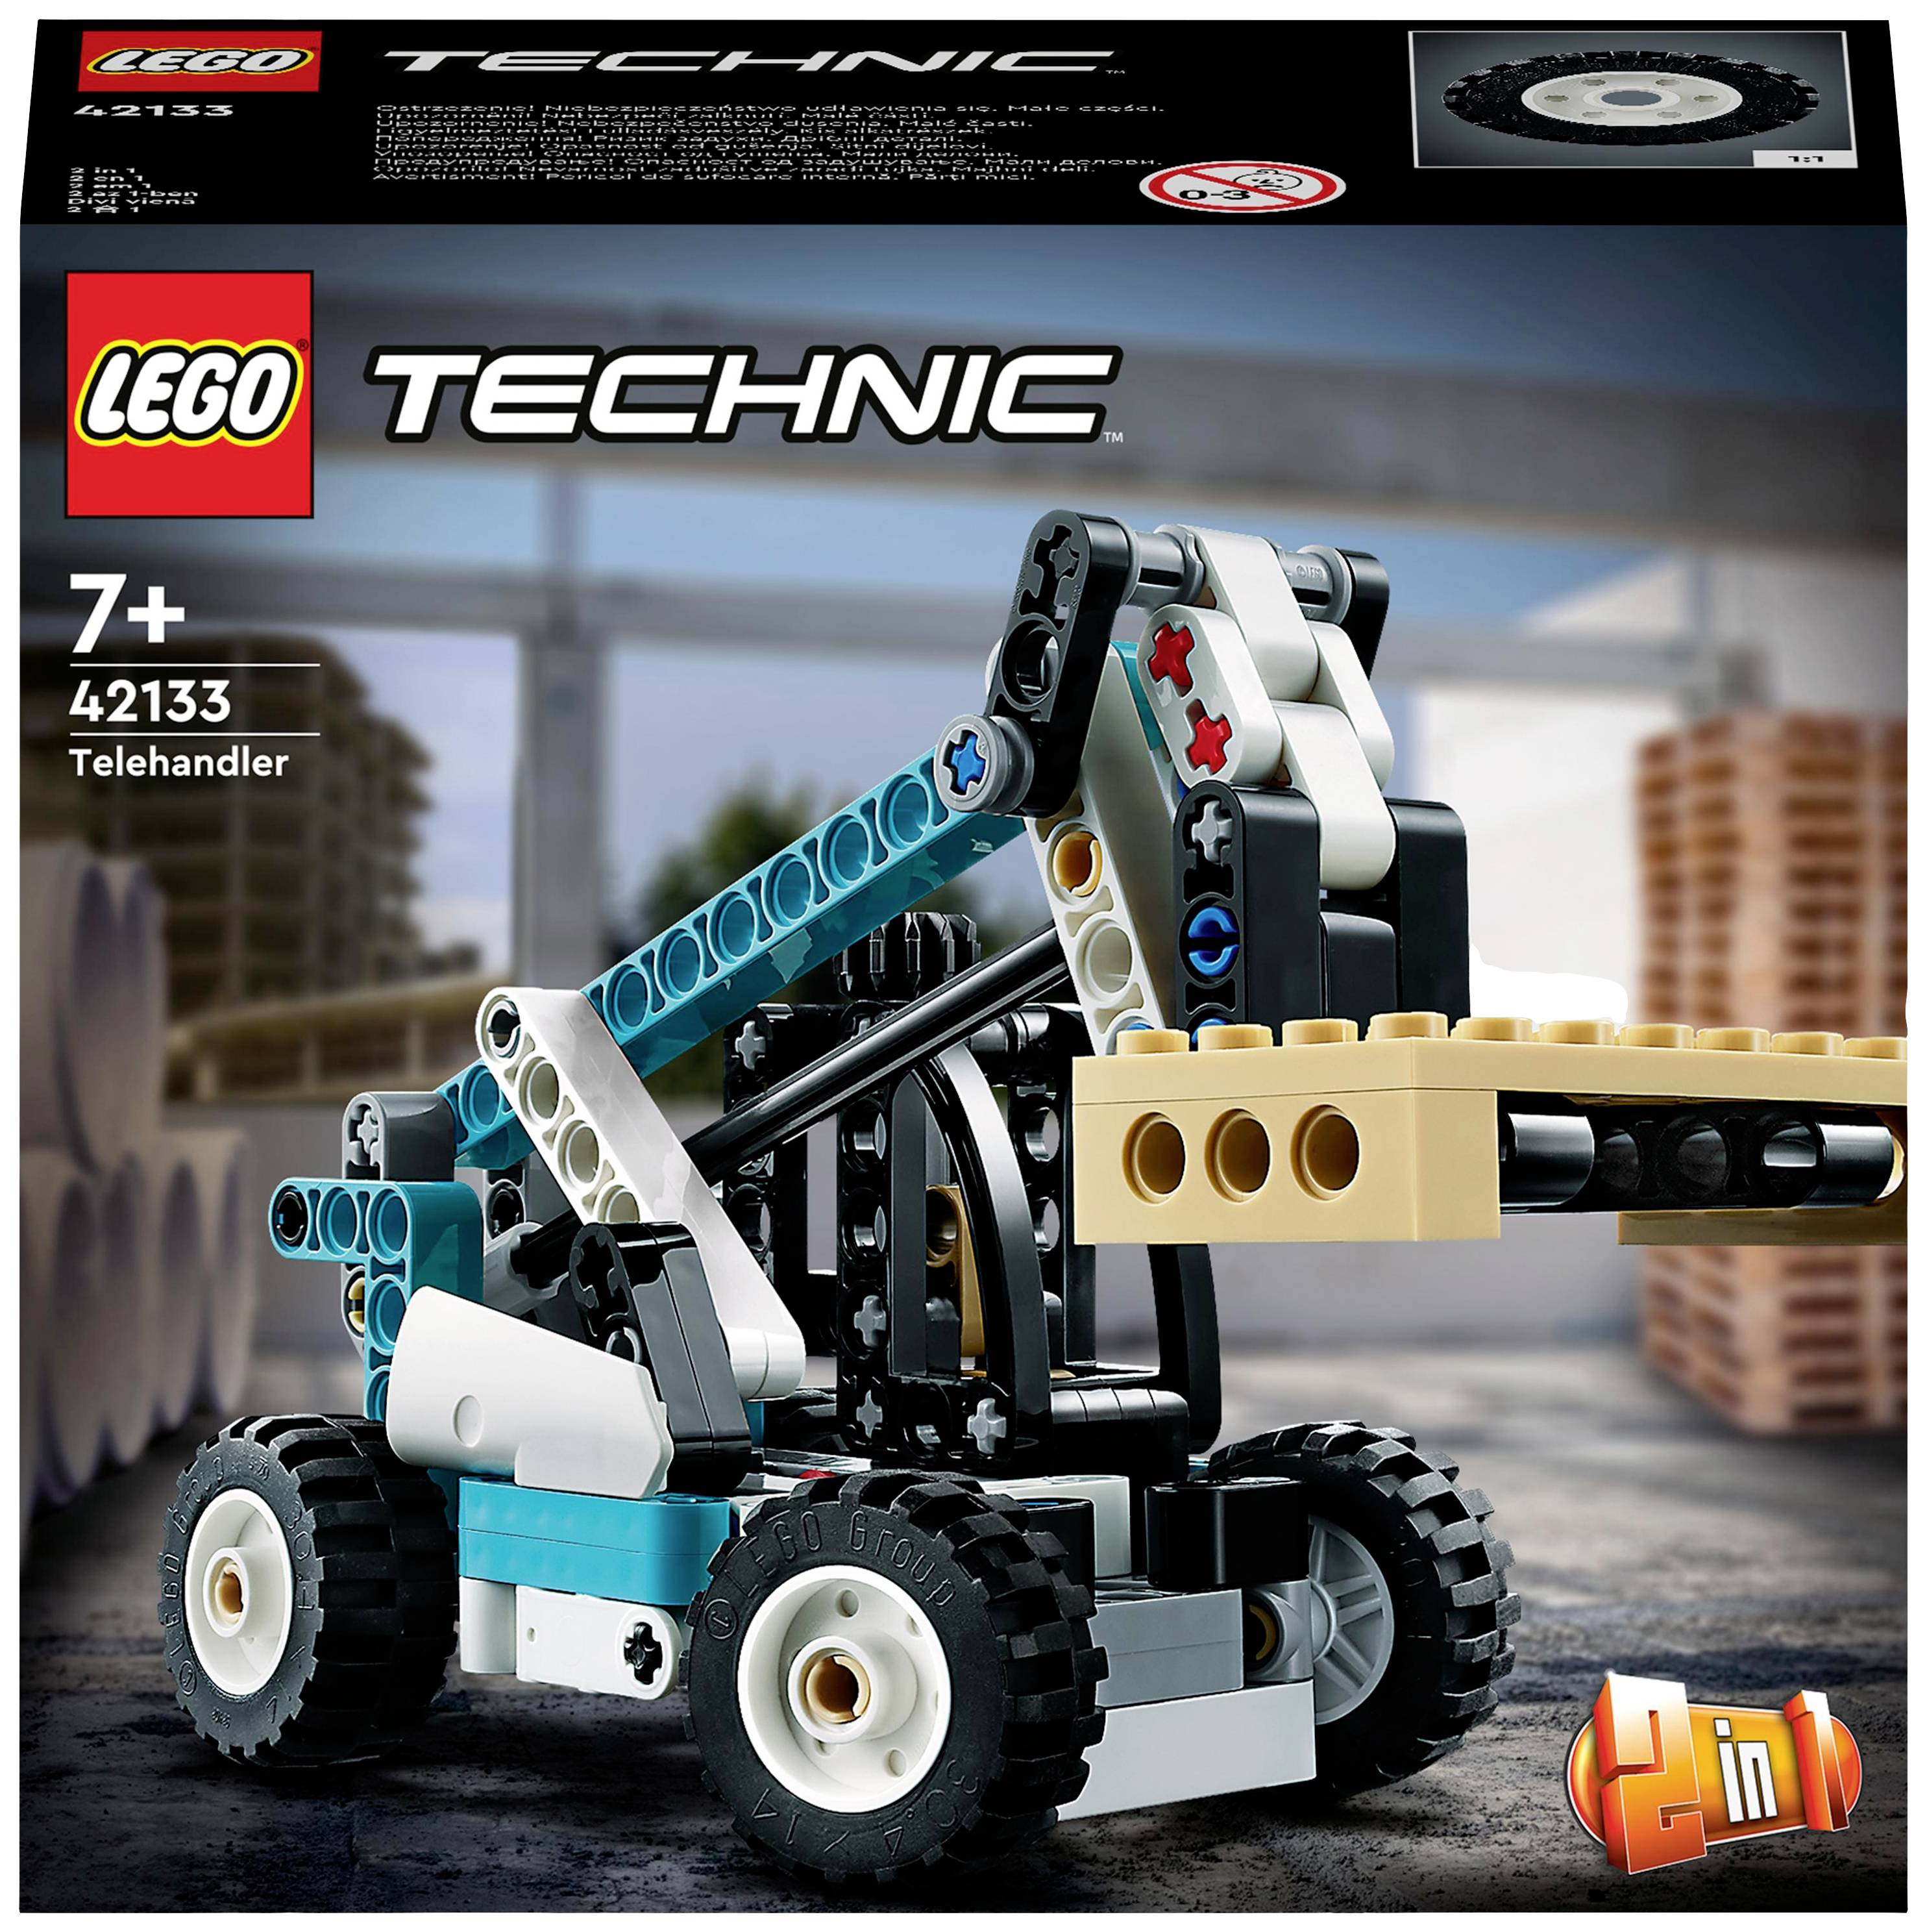 Messing verband Bedankt LEGO® TECHNIC 42133 Telescooplader kopen ? Conrad Electronic